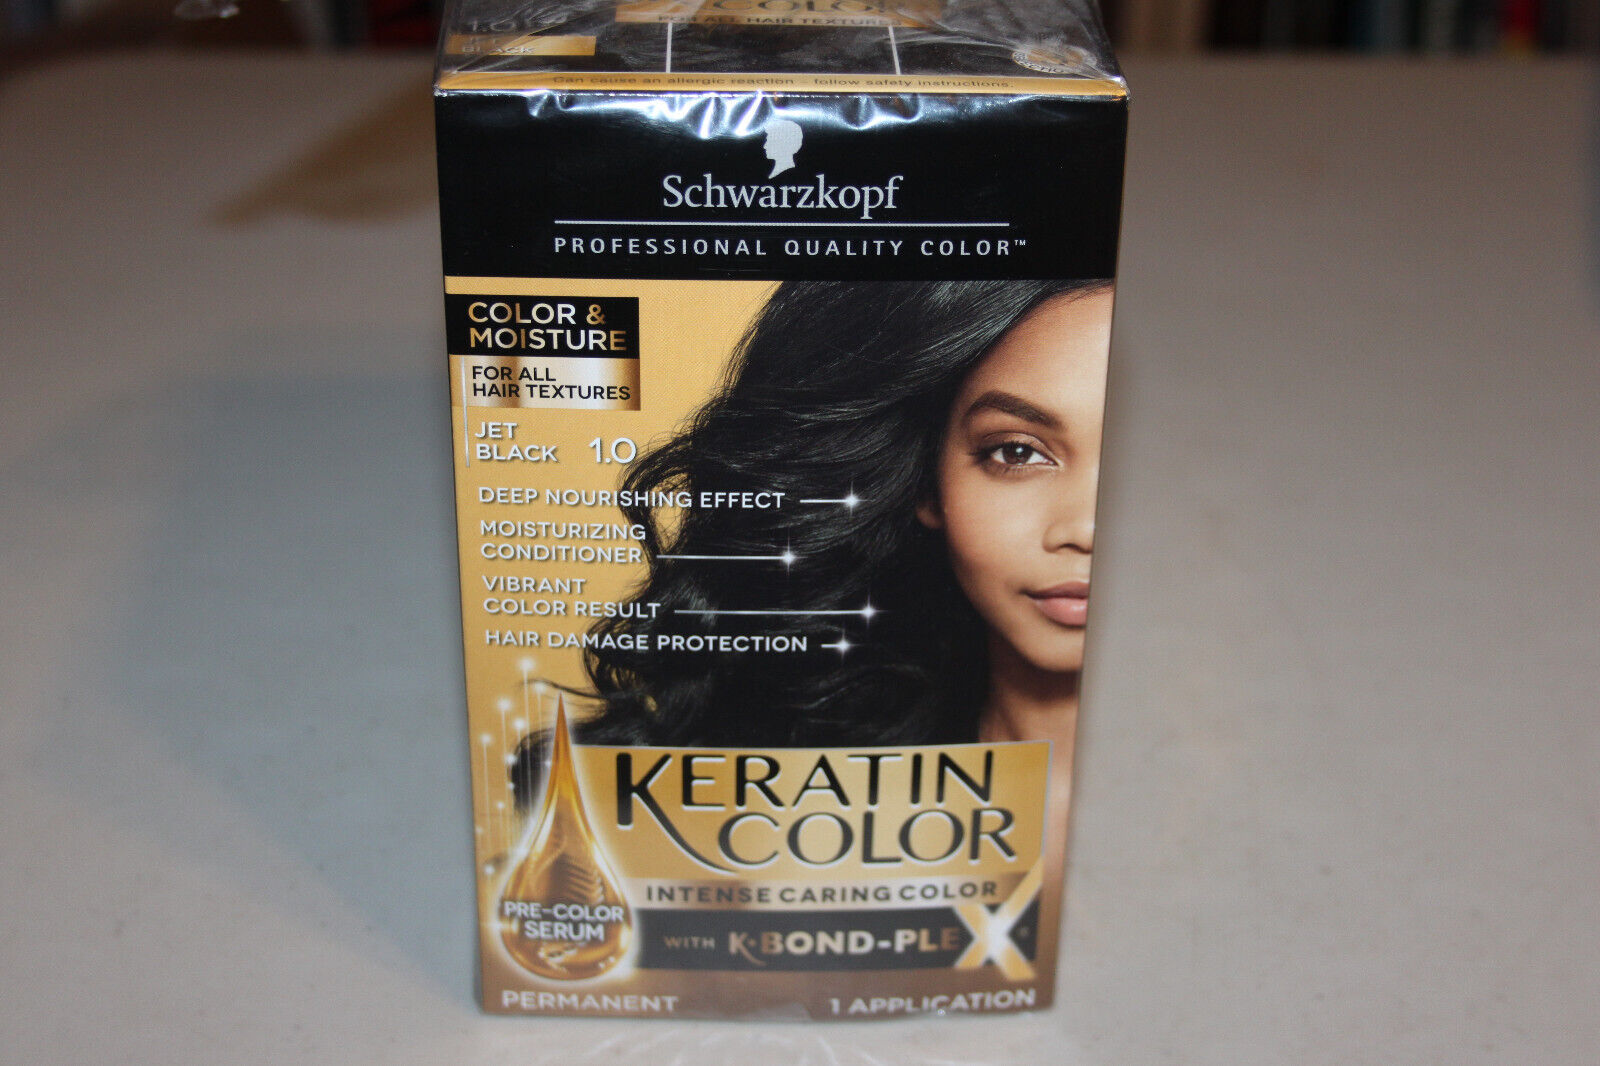 Lot of 3 NEW Keratin Color Hair Color, Jet Black . Schwarzkopf, Level 3  17000193366 | eBay